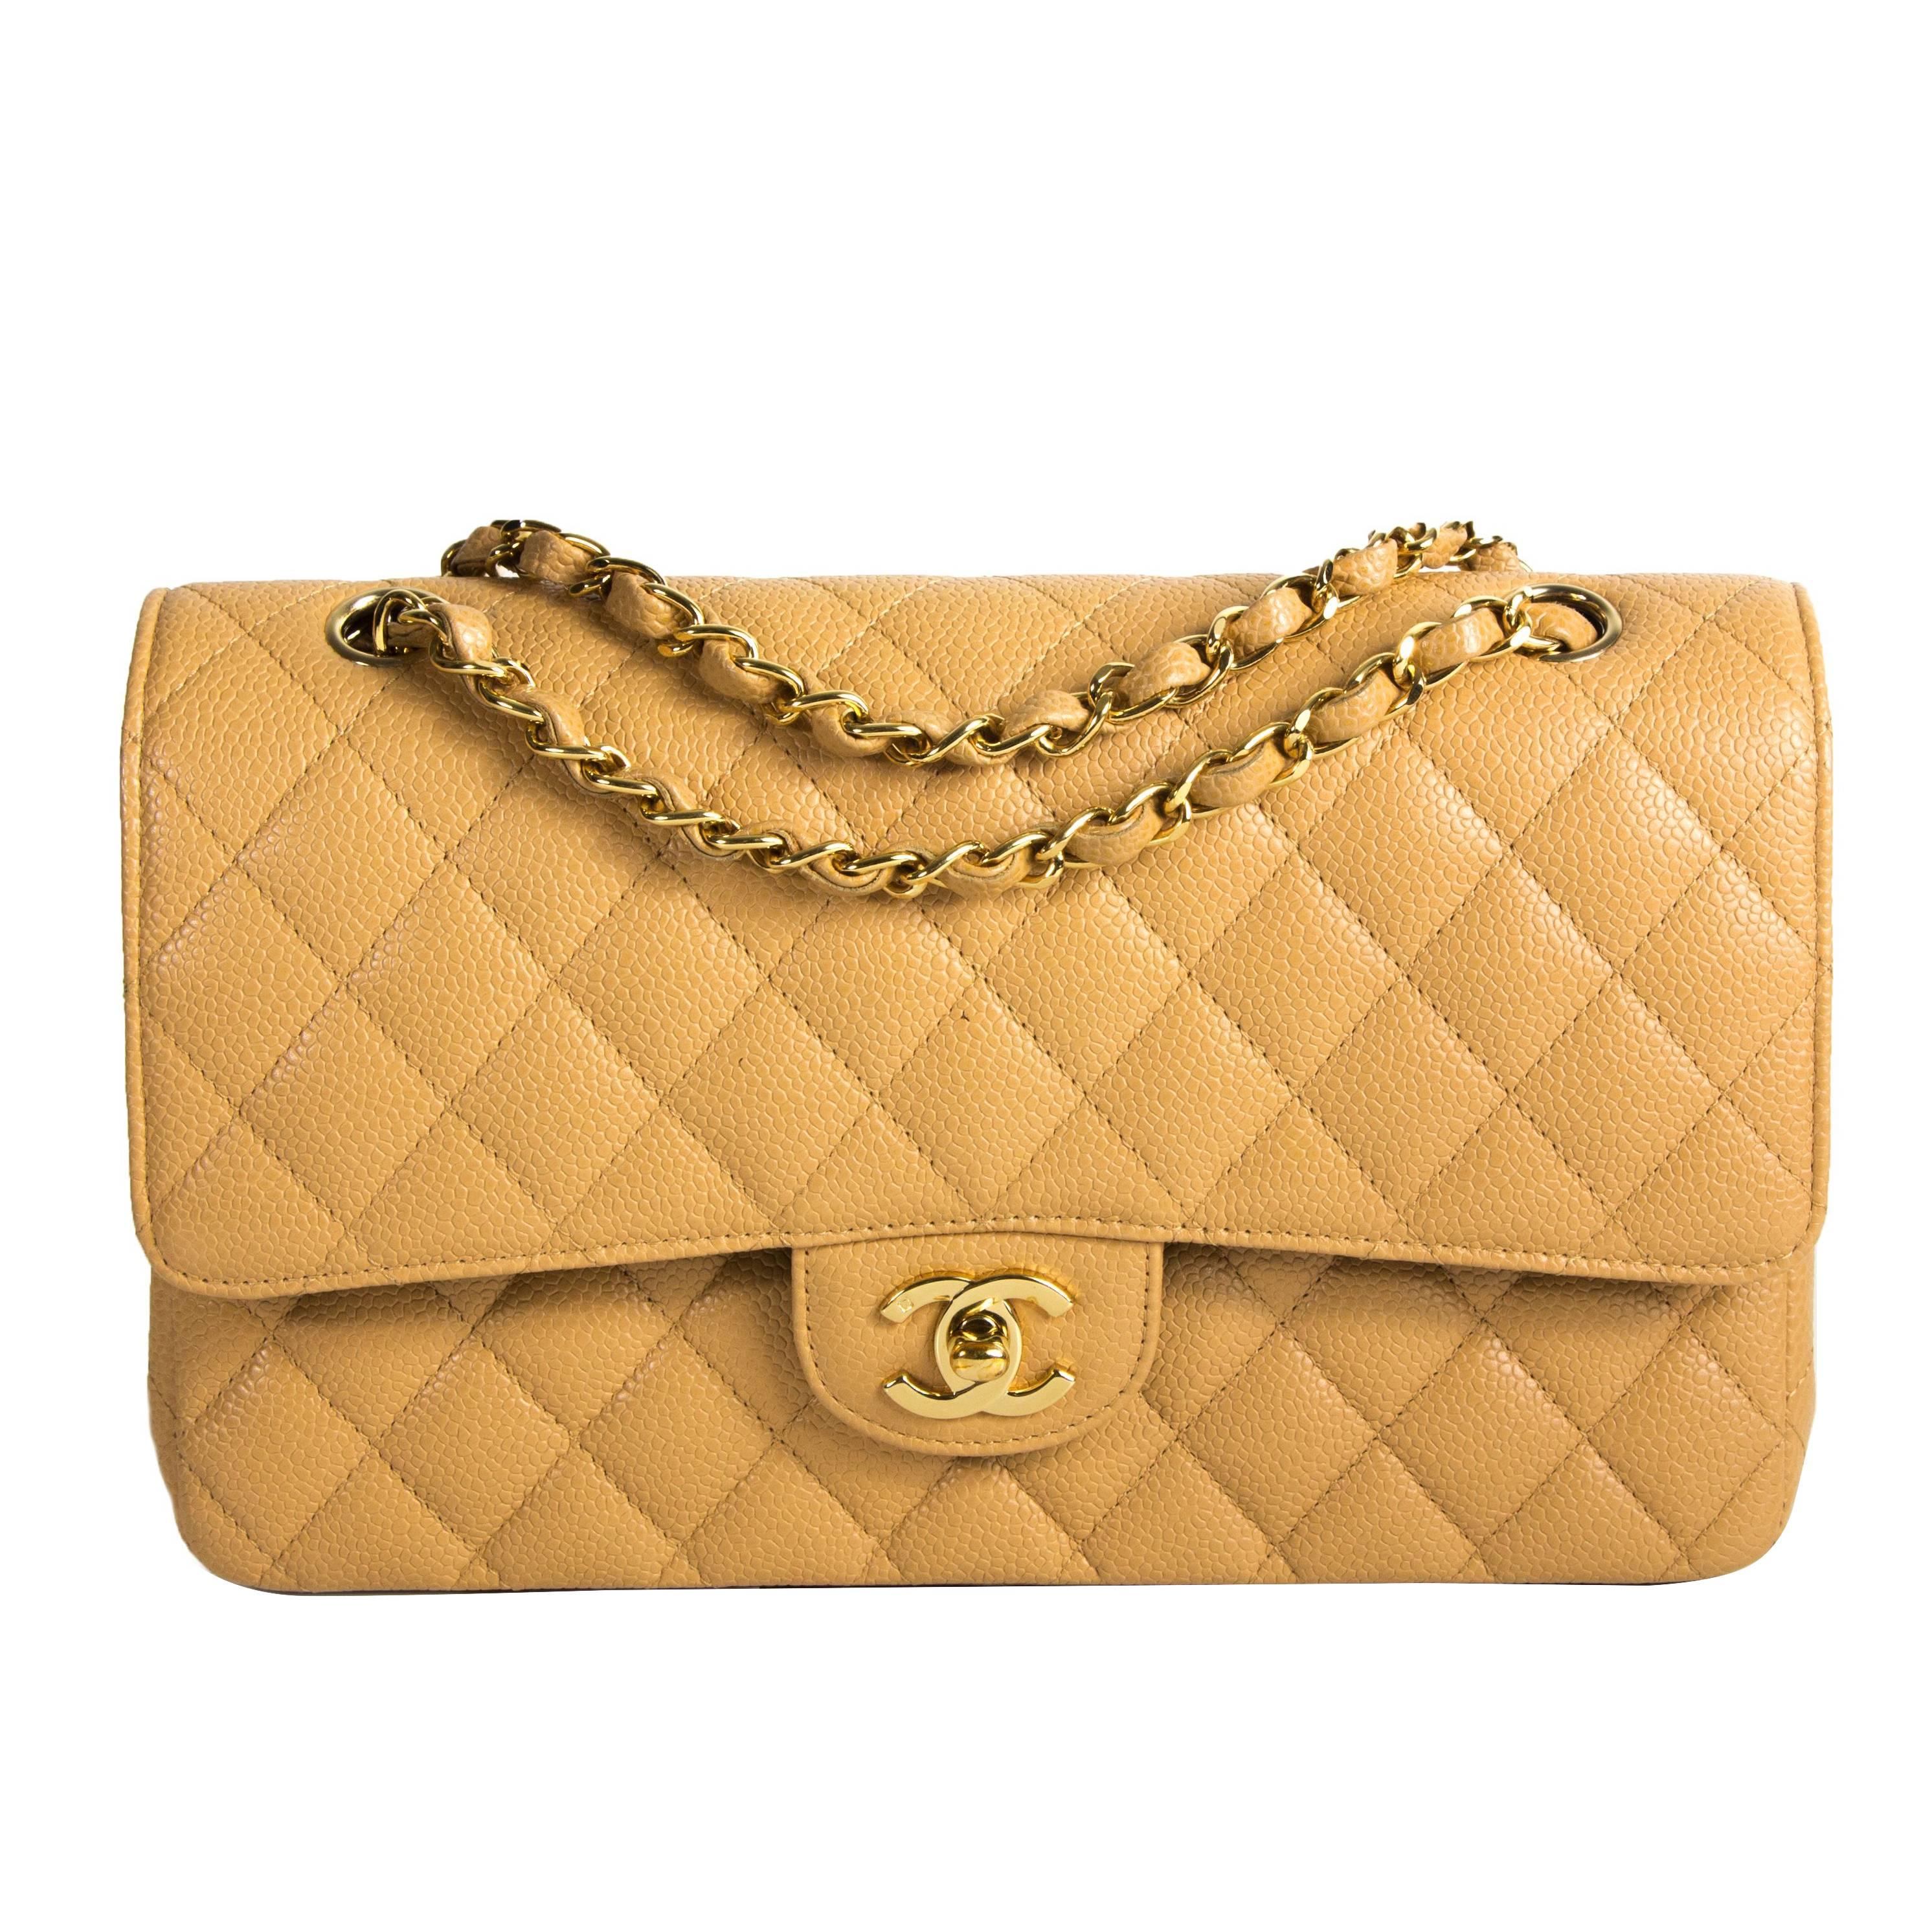 Chanel Caviar Double Flap Bag - Tan Beige Quilted Leather Medium CC Gold Handbag